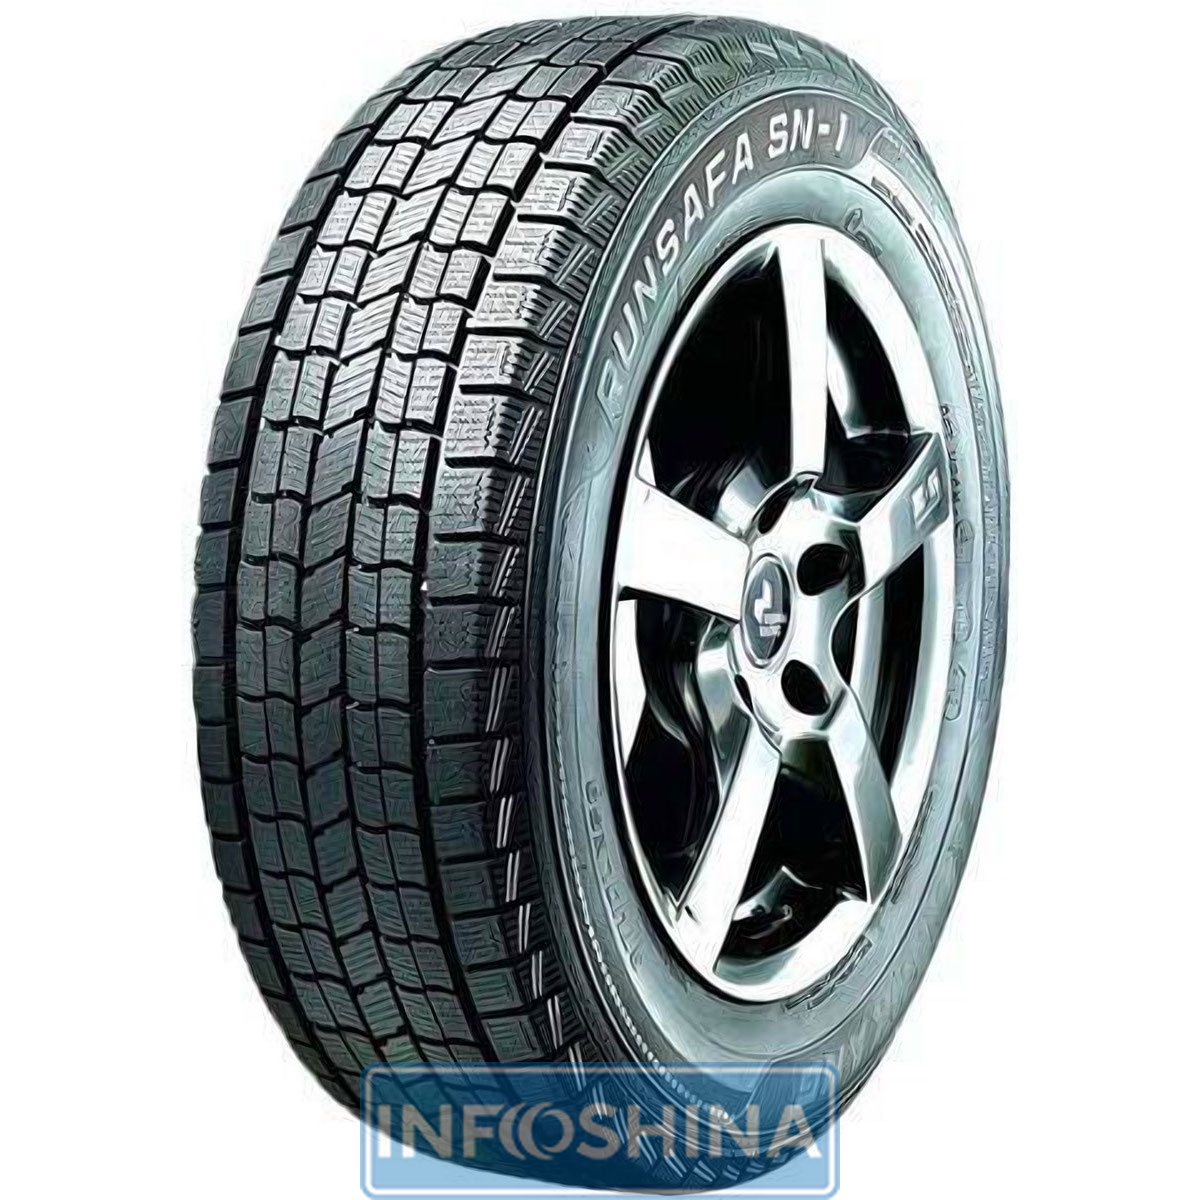 Купить шины Nankang Runsafa SN-1 225/65 R17 102Q